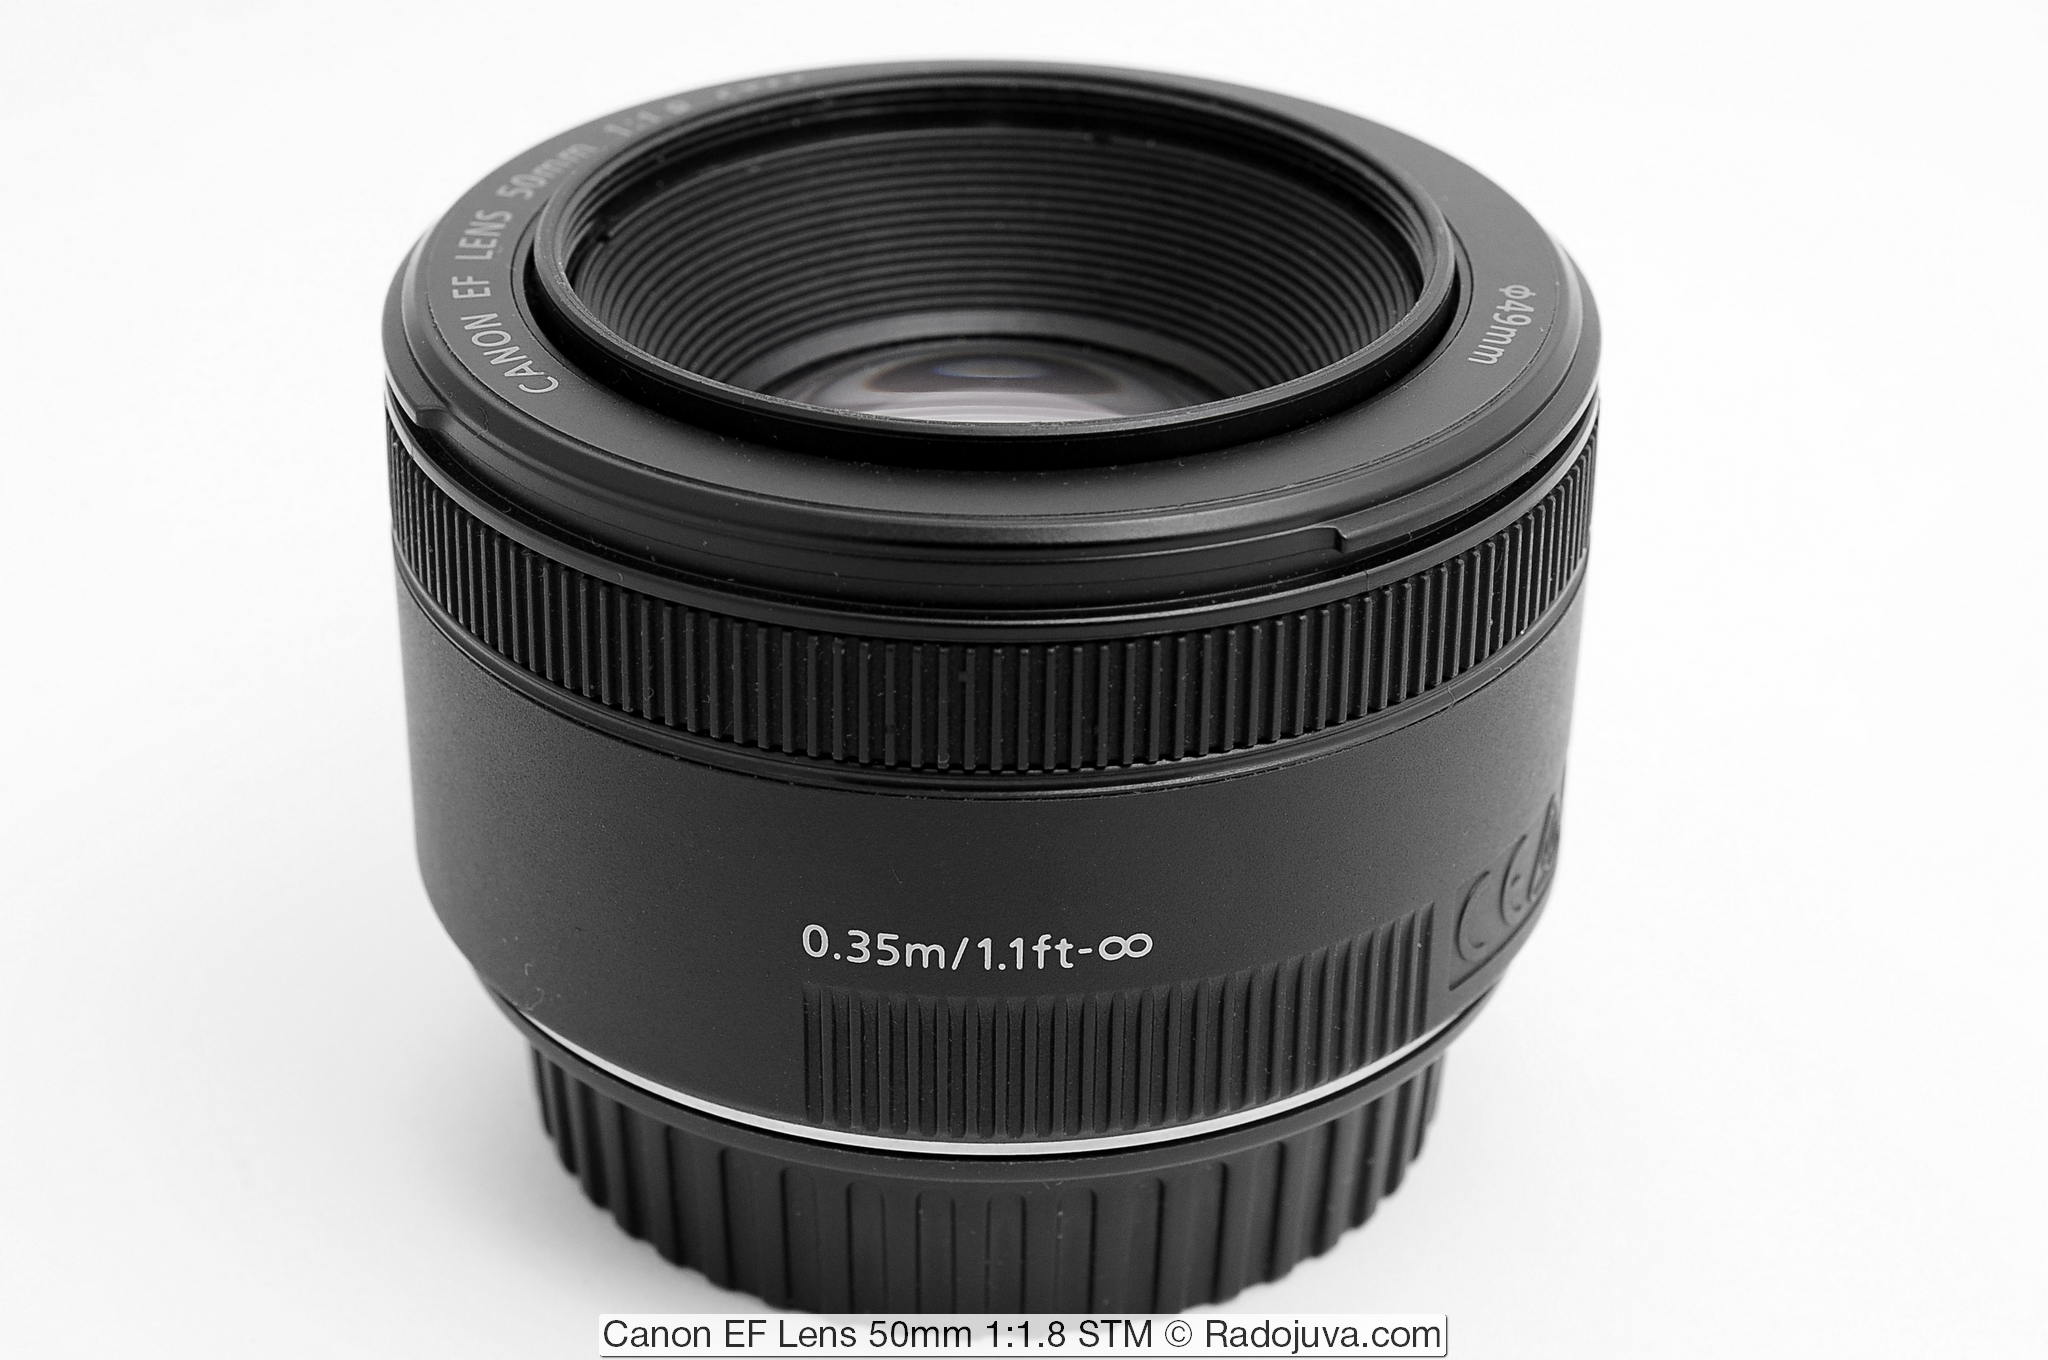 Canon EF Lens 50mm 1: 1.8 STM